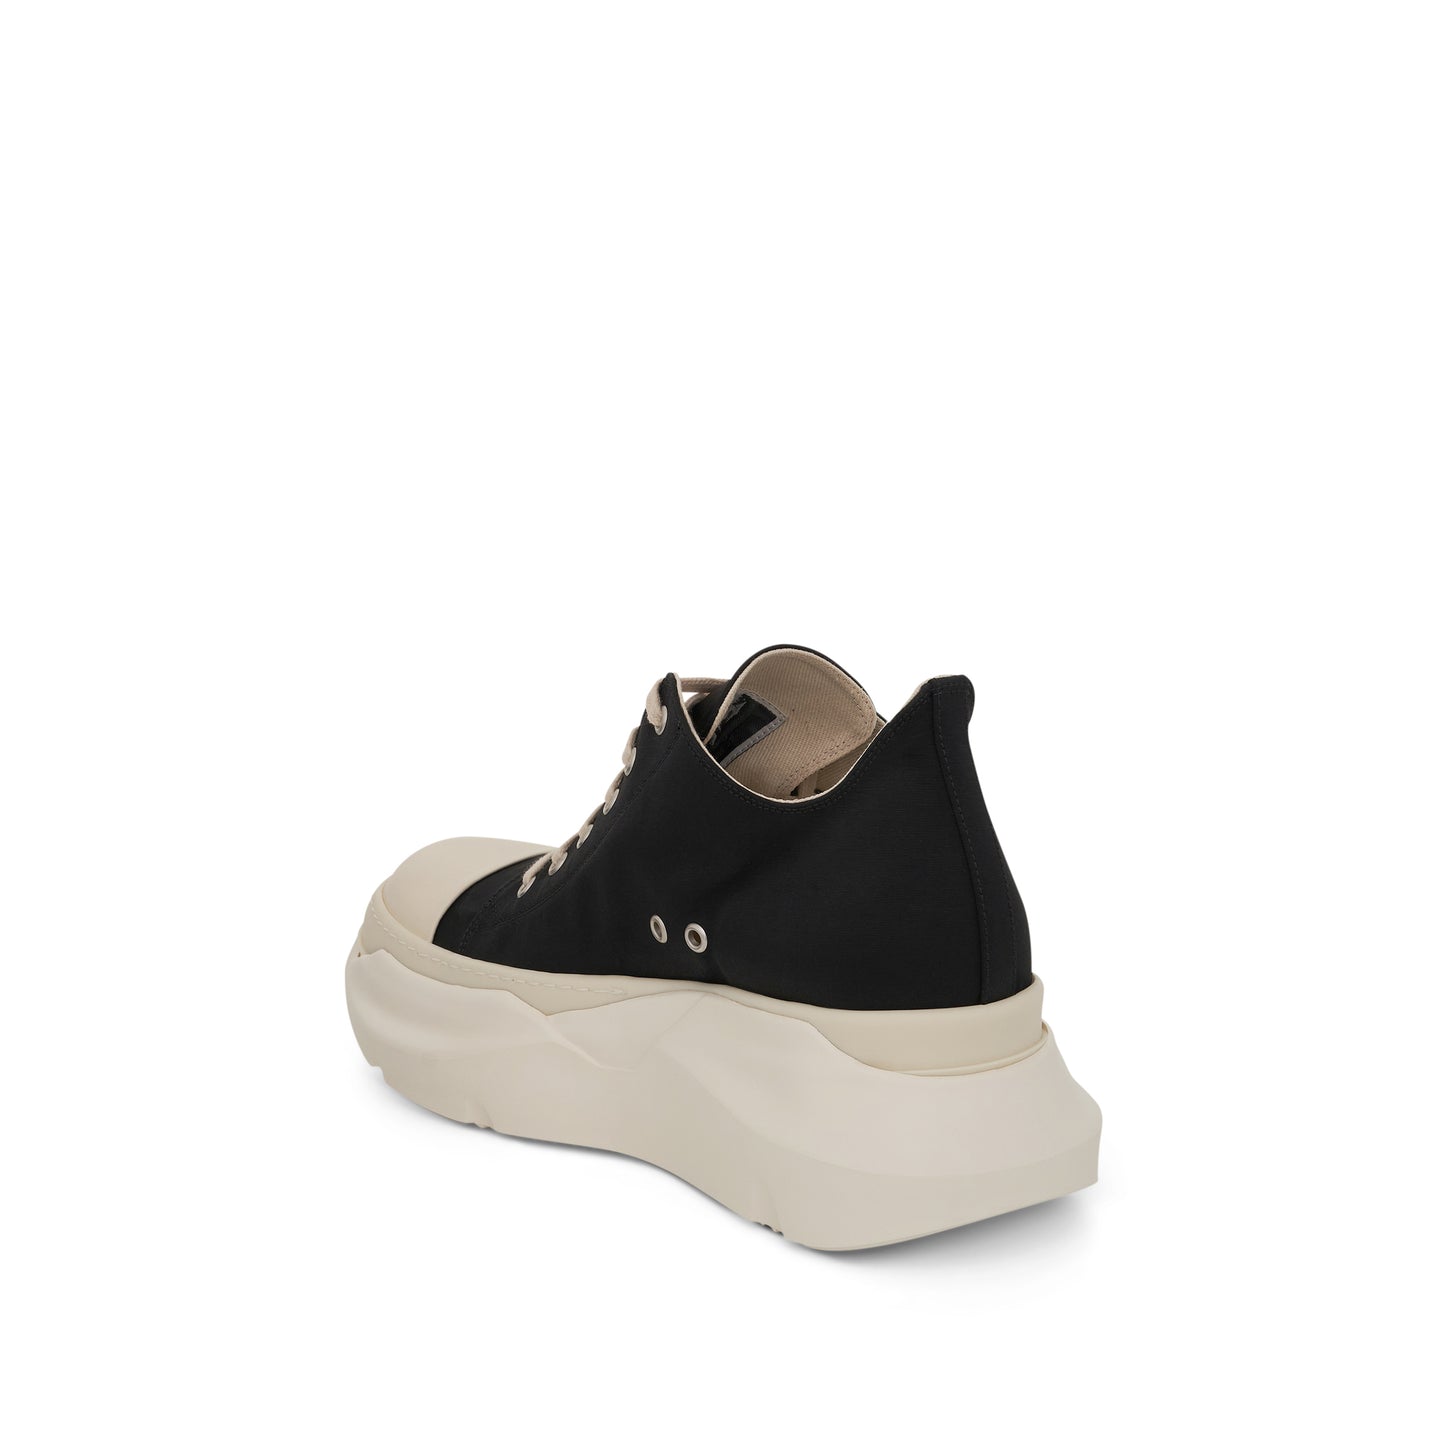 DRKSHDW Abstract Low Sneaker in Black/Milk